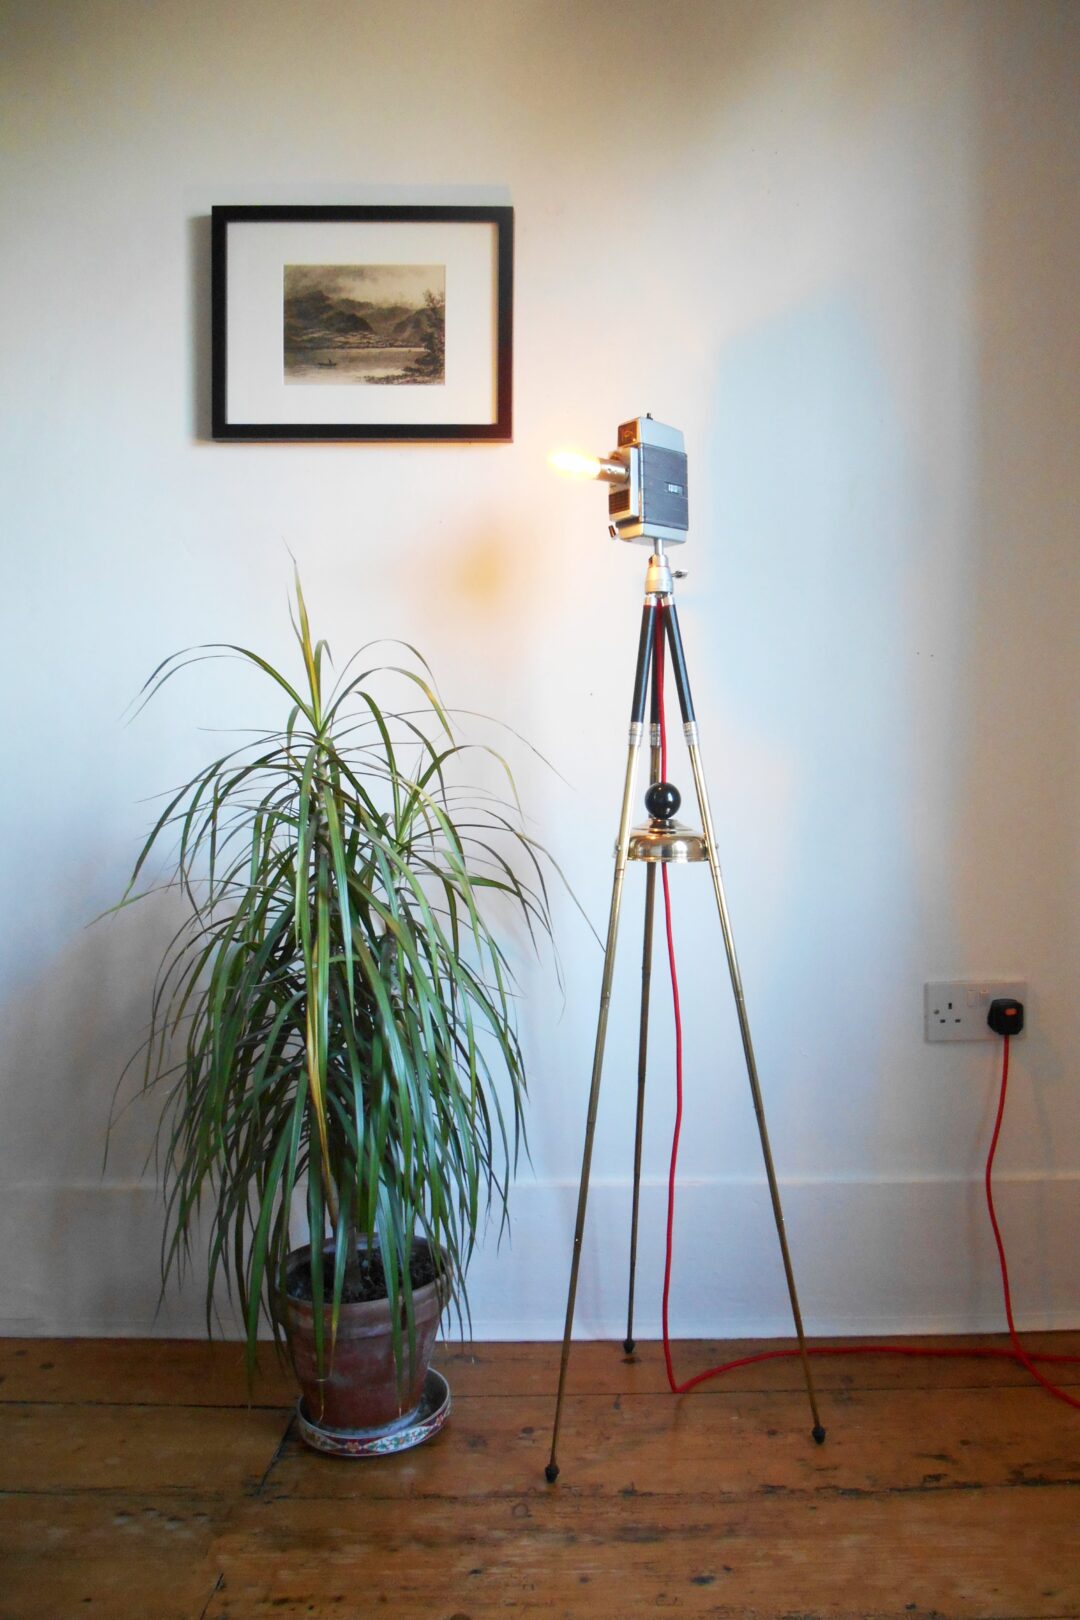 A cine cameras tripod floor lamp by Fiona Bradshaw Designs